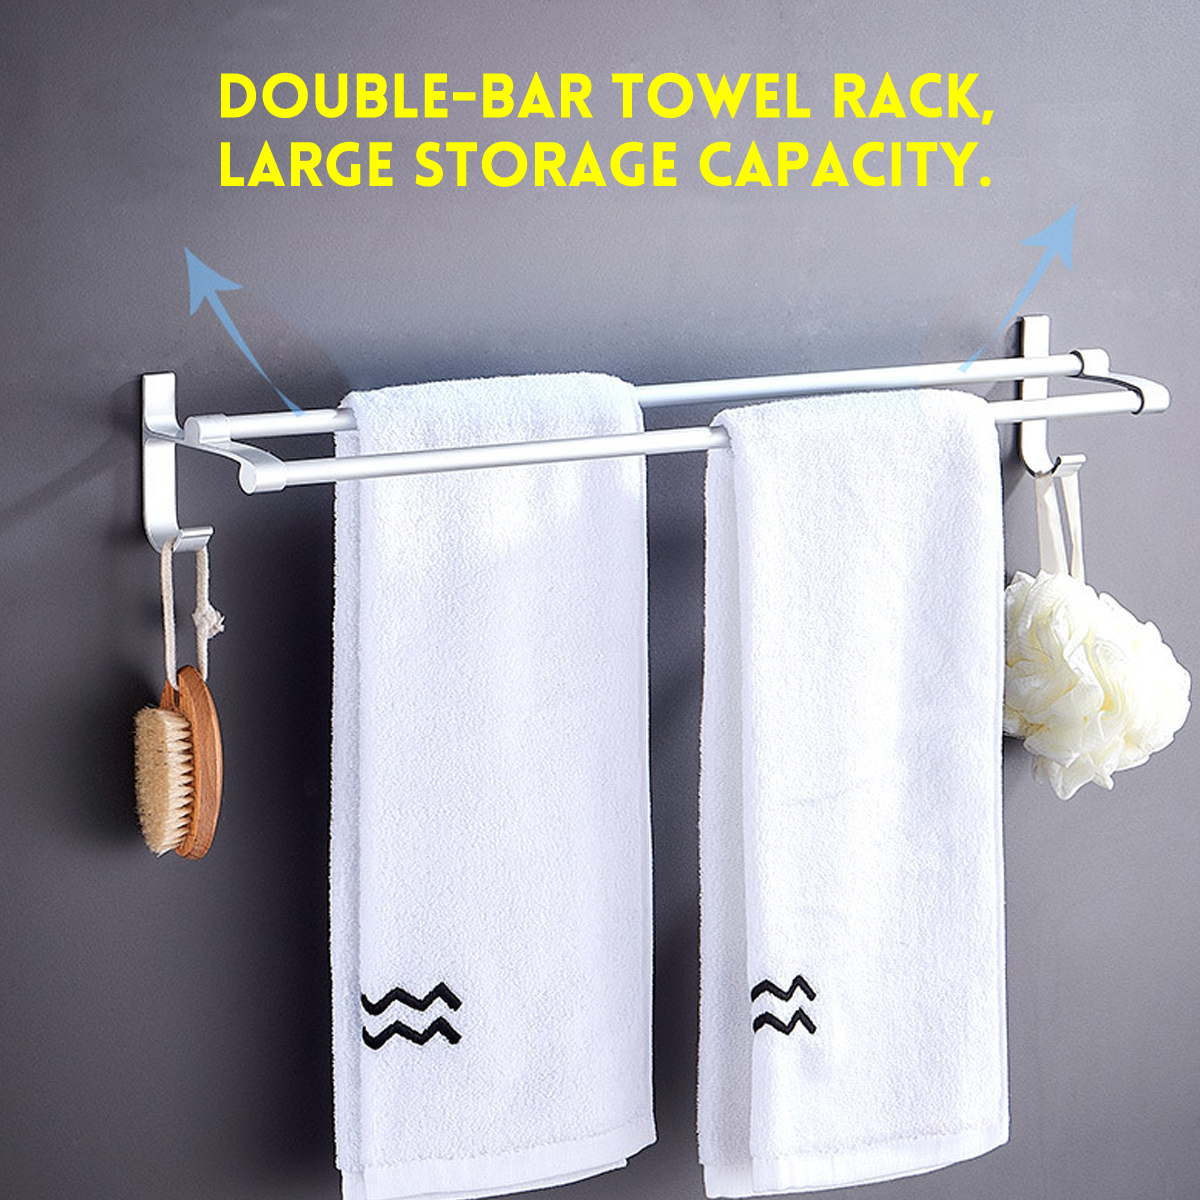 405060cm-Double-Bar-Towel-Rack-Shelf-Bathroom-Wall-Mounted-Shower-Towel-Holder-Aluminum-Hanger-1787932-2